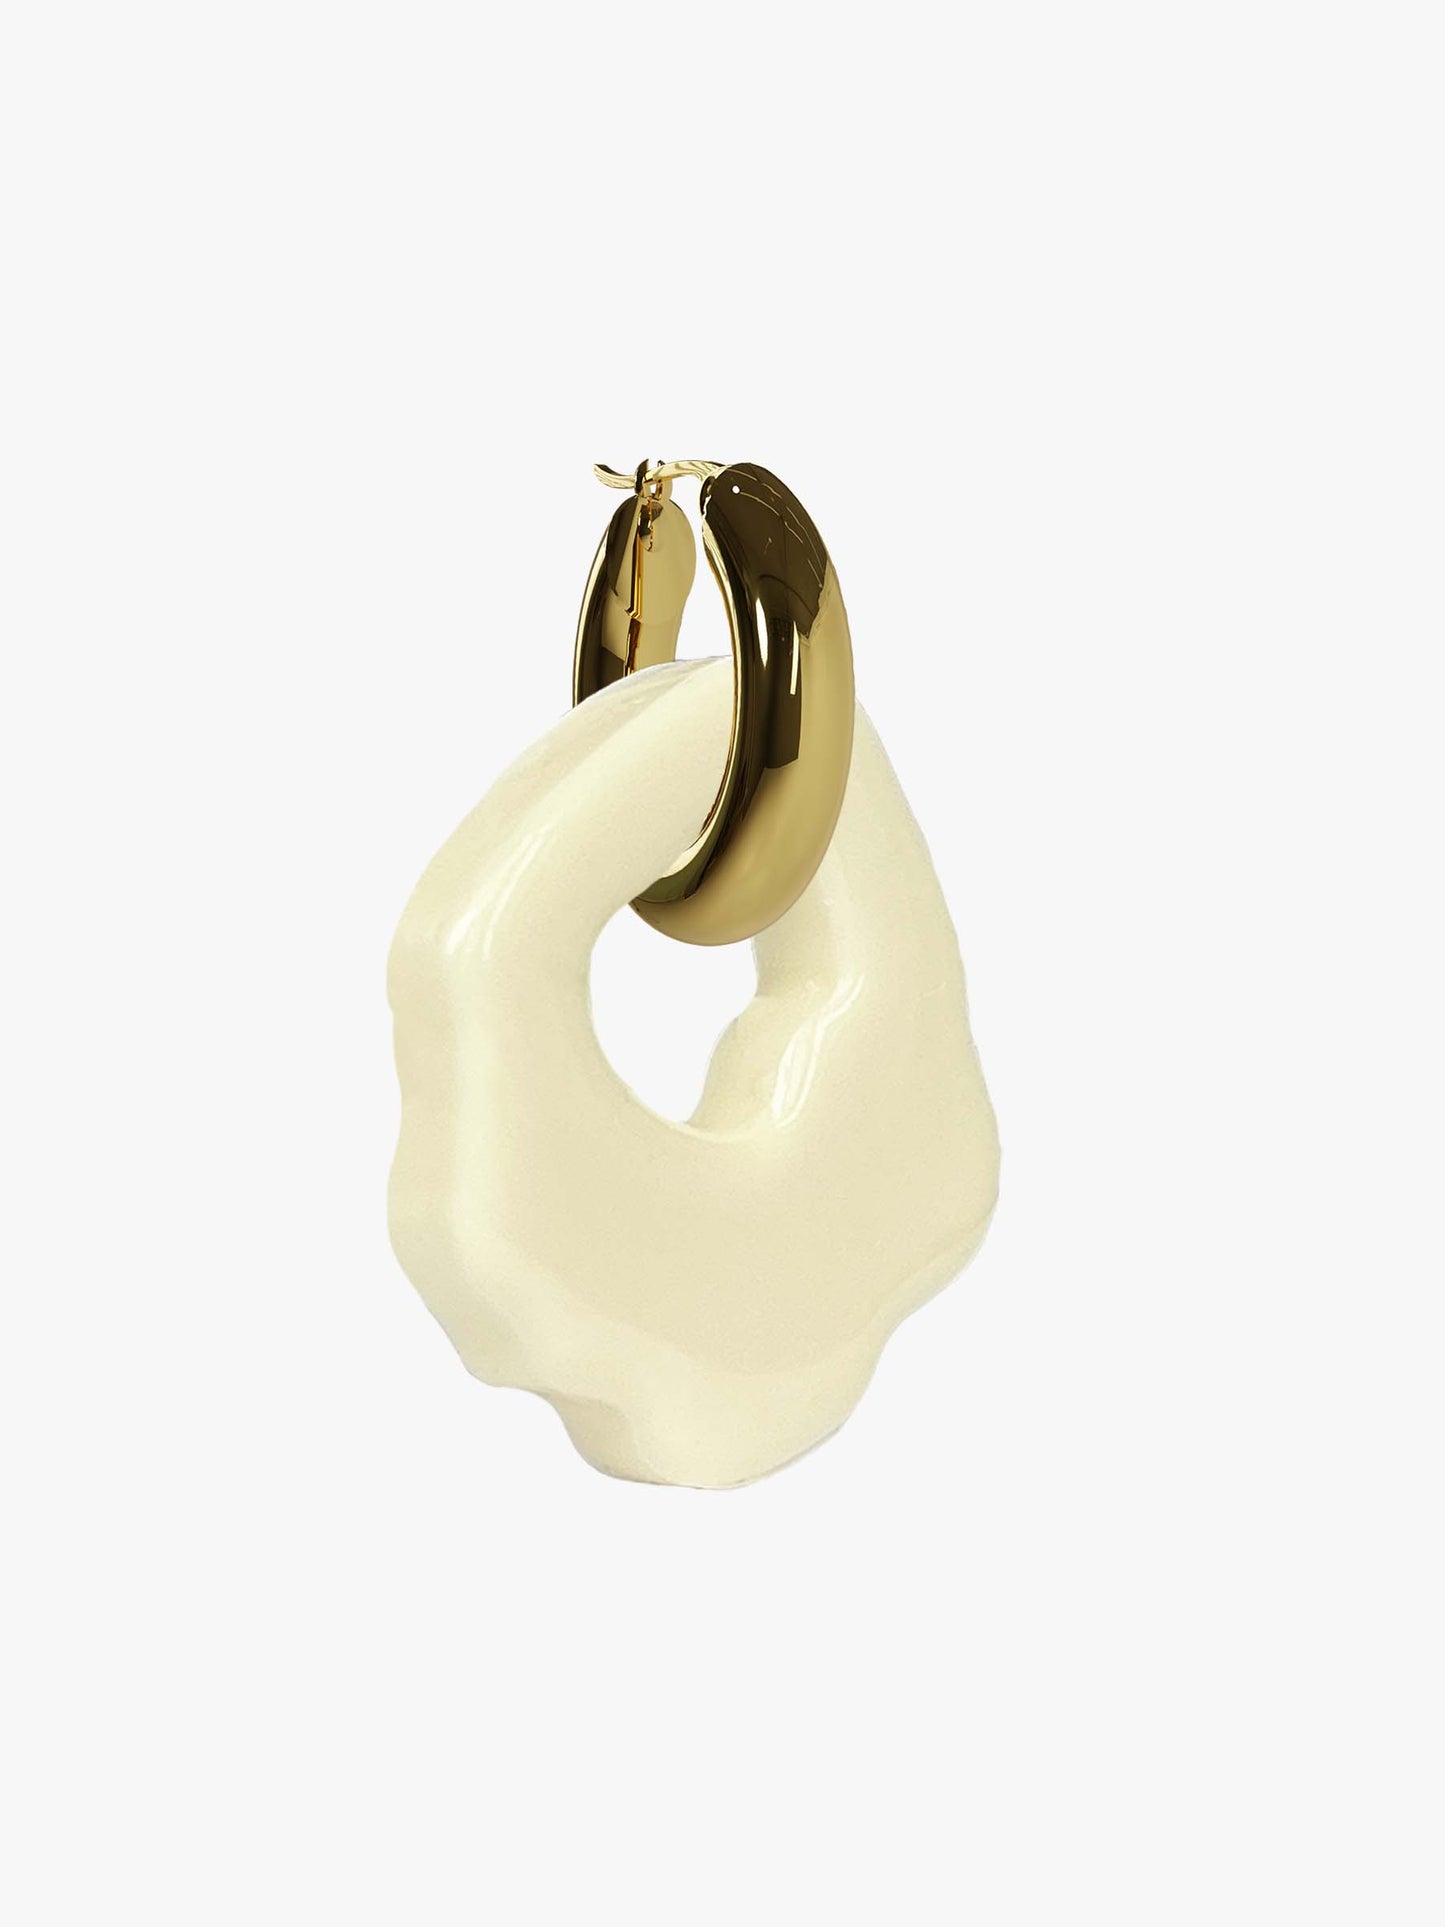 Abe white gold earring (pair)